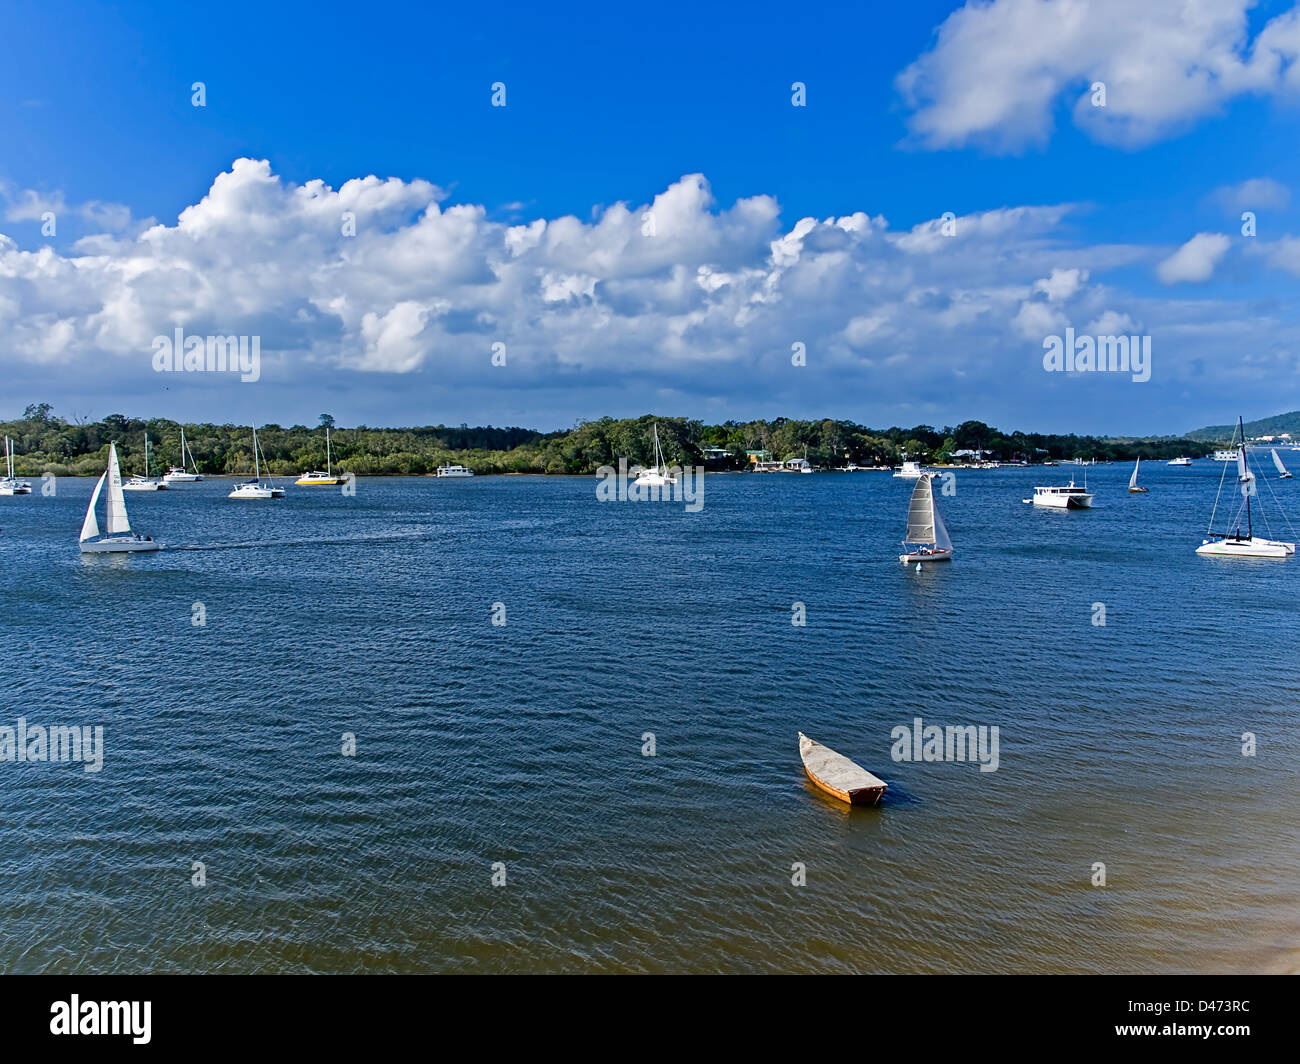 Holiday destination - Sailing boats on Noosa River ,Noosaville Sunshine Coast Queensland Australia. Stock Photo